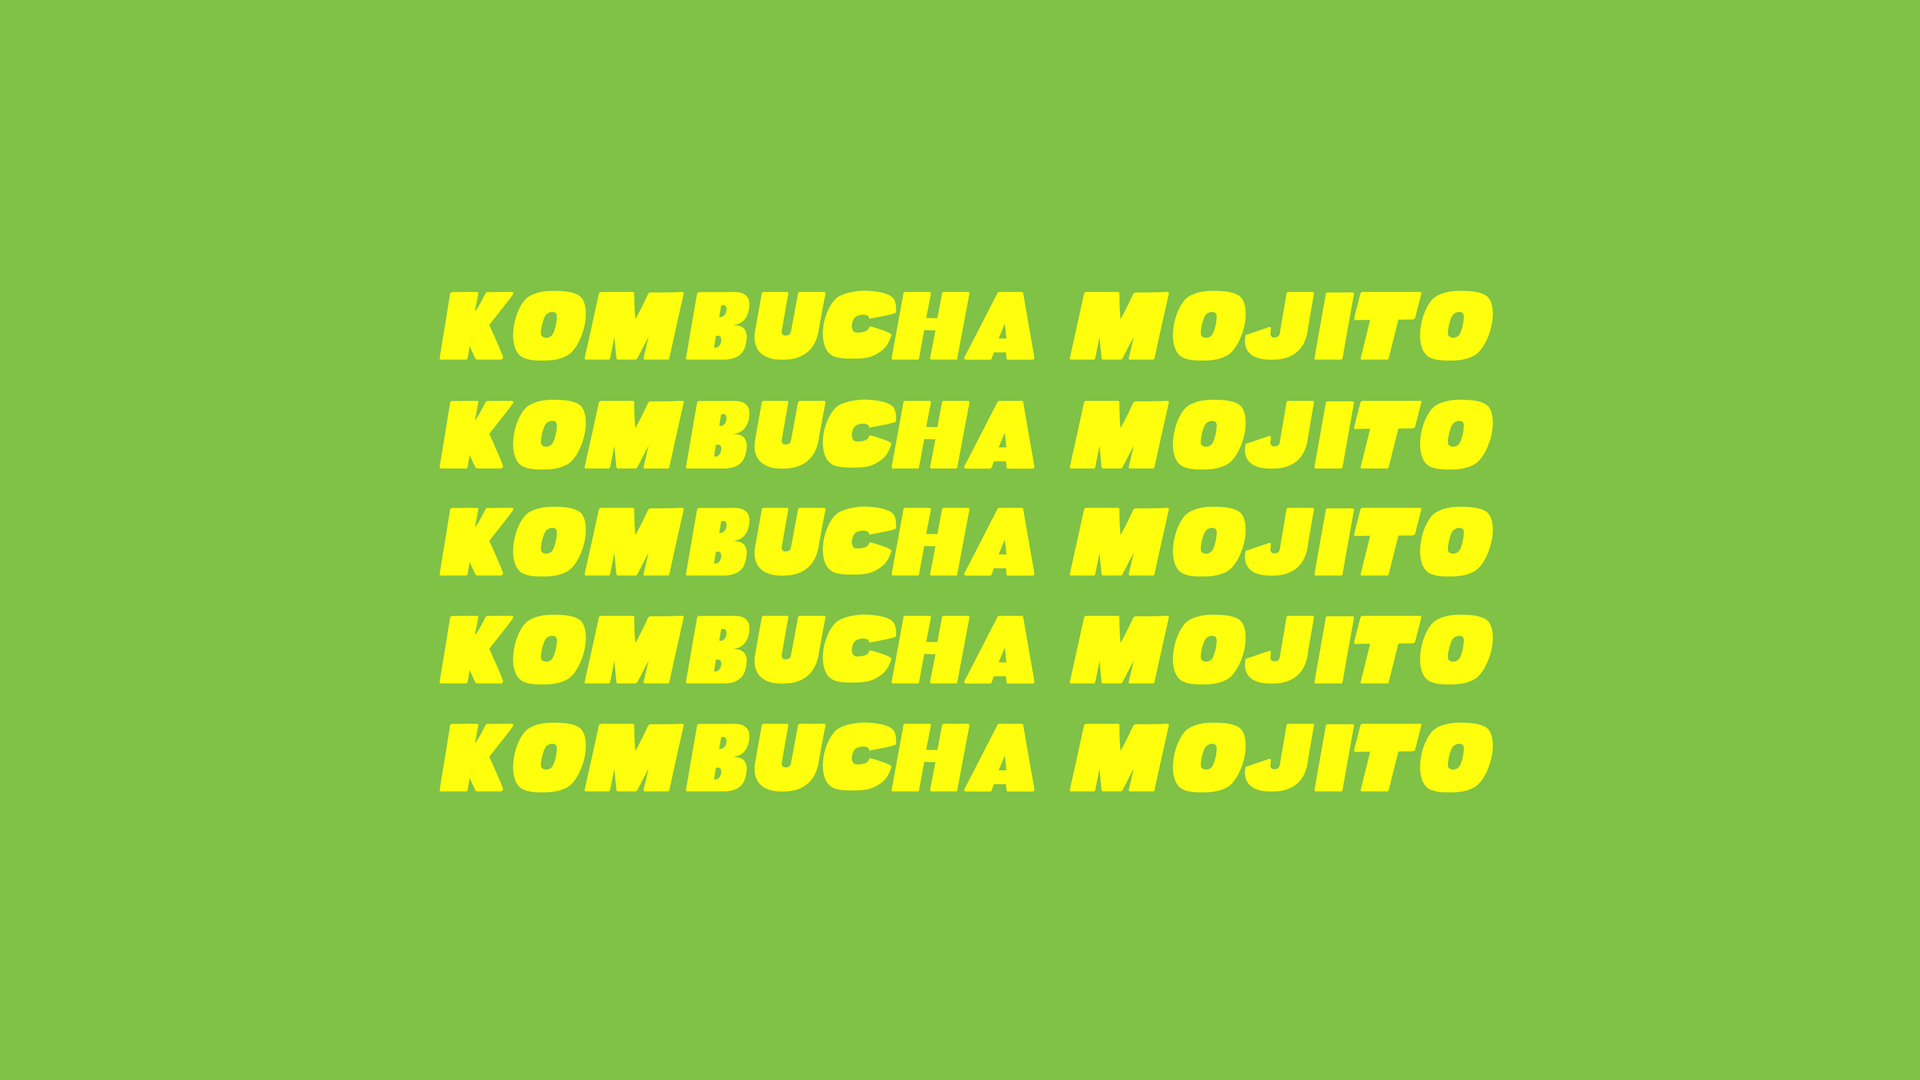 Kombucha Mojito from Commissary